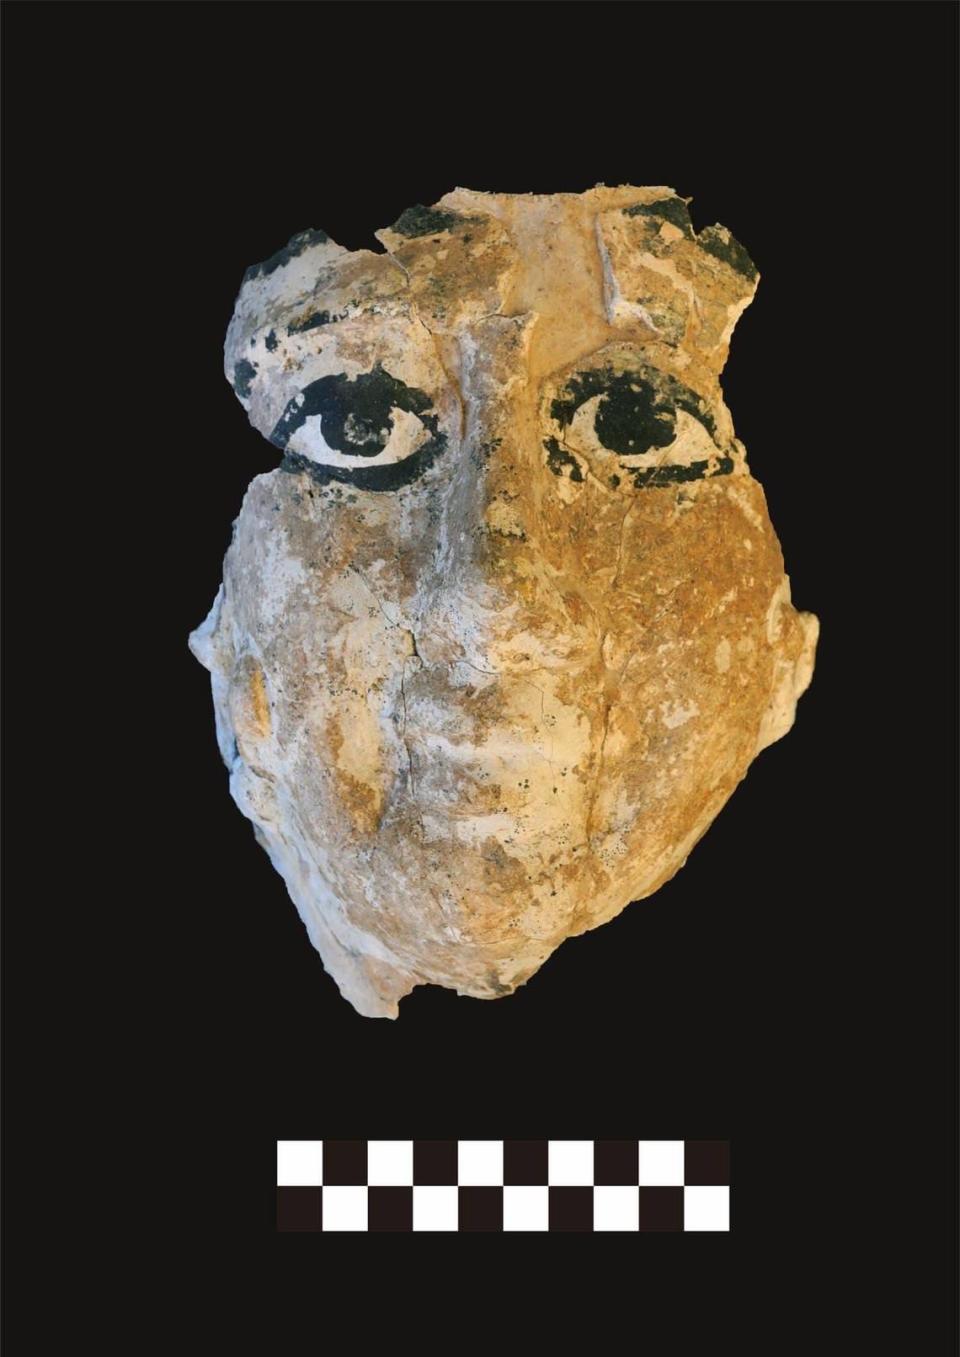 A burial masks found at the Saqqara site.